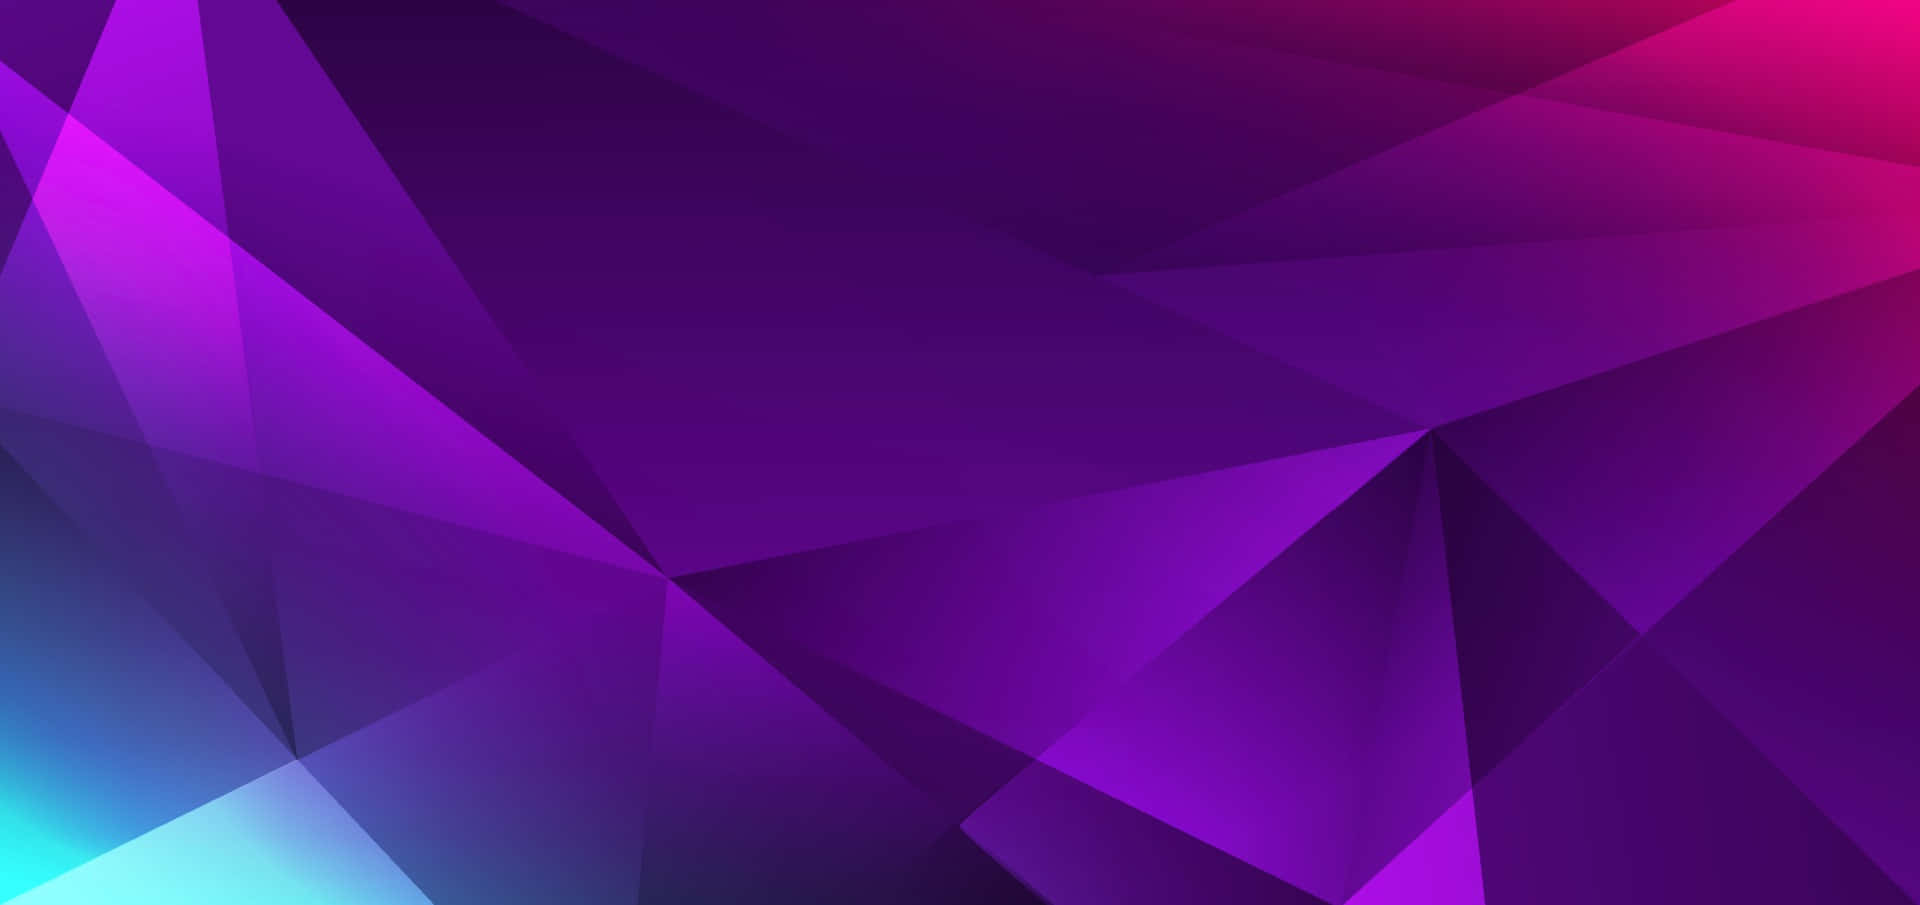 Vibrant Purple Textured Background